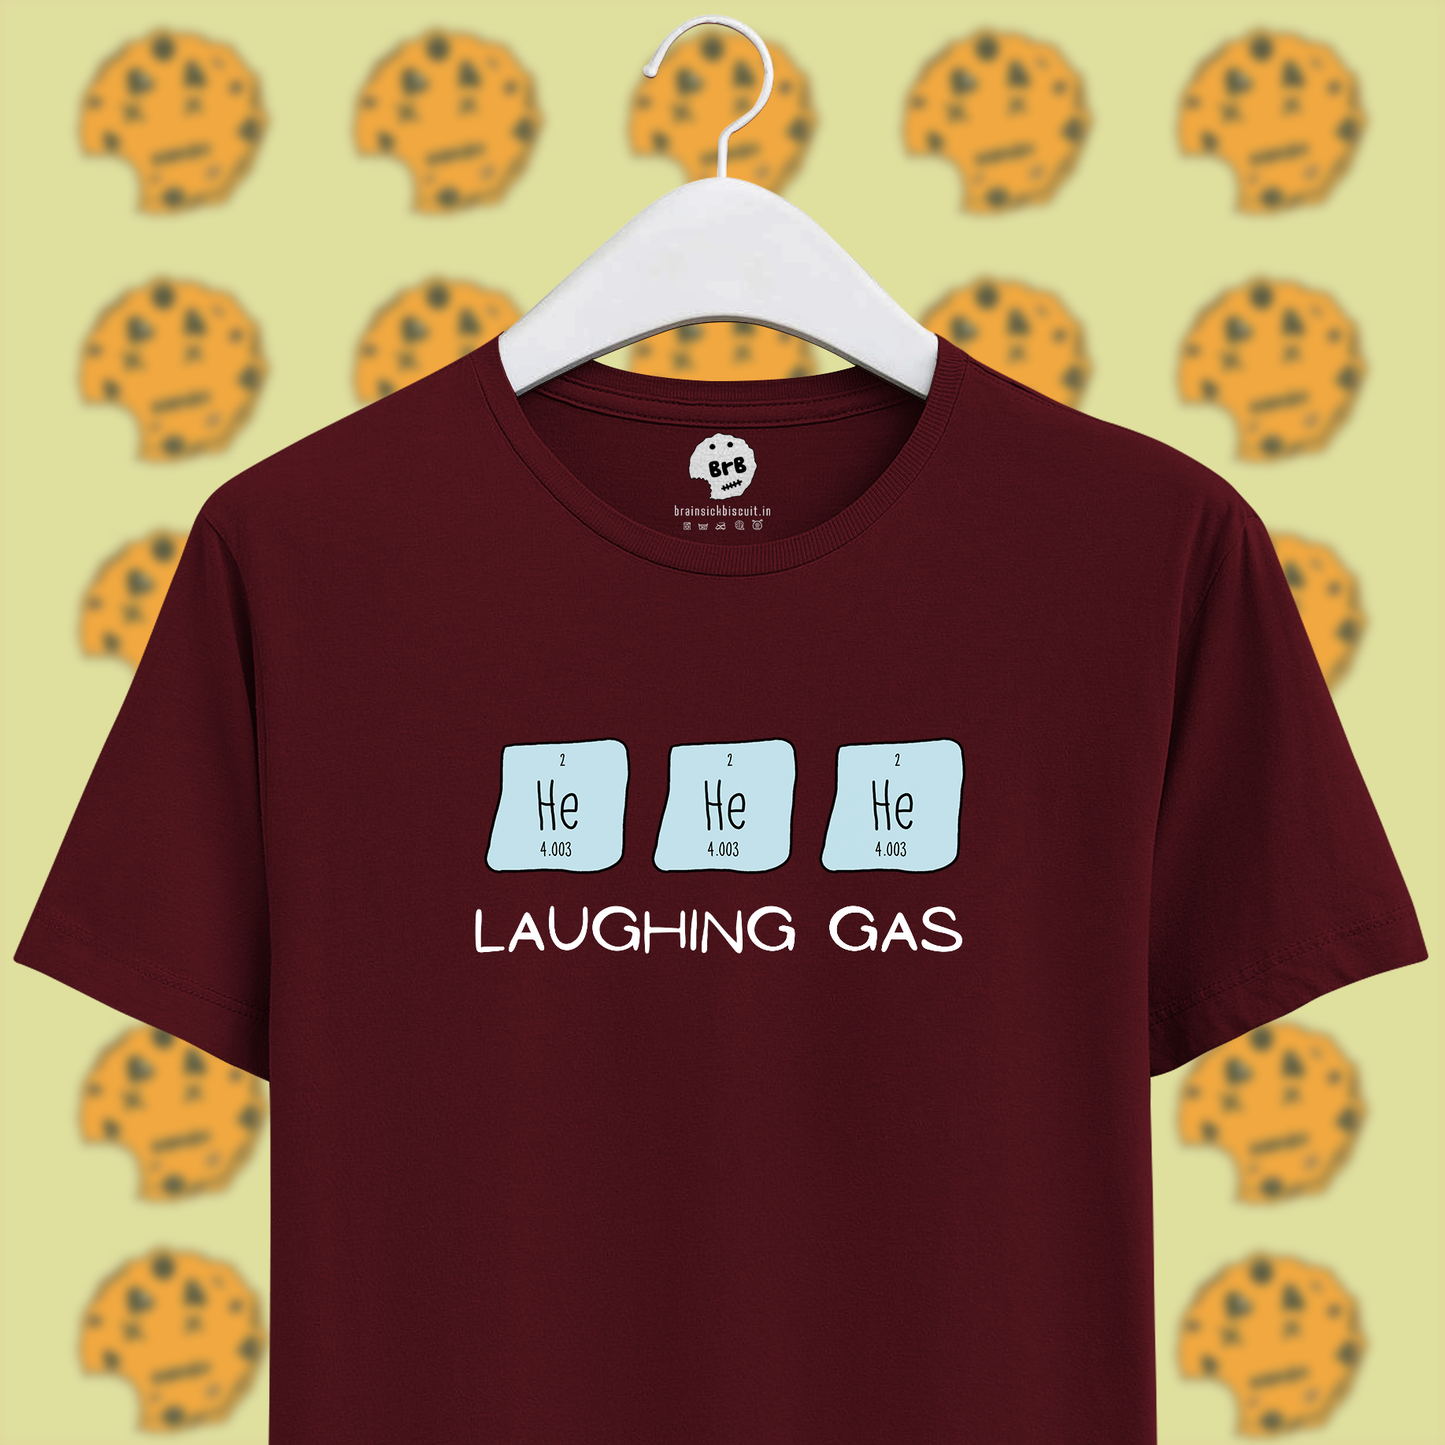 Laughing gas helium joke pun on maroon unisex half sleeves unisex cotton t-shirt.